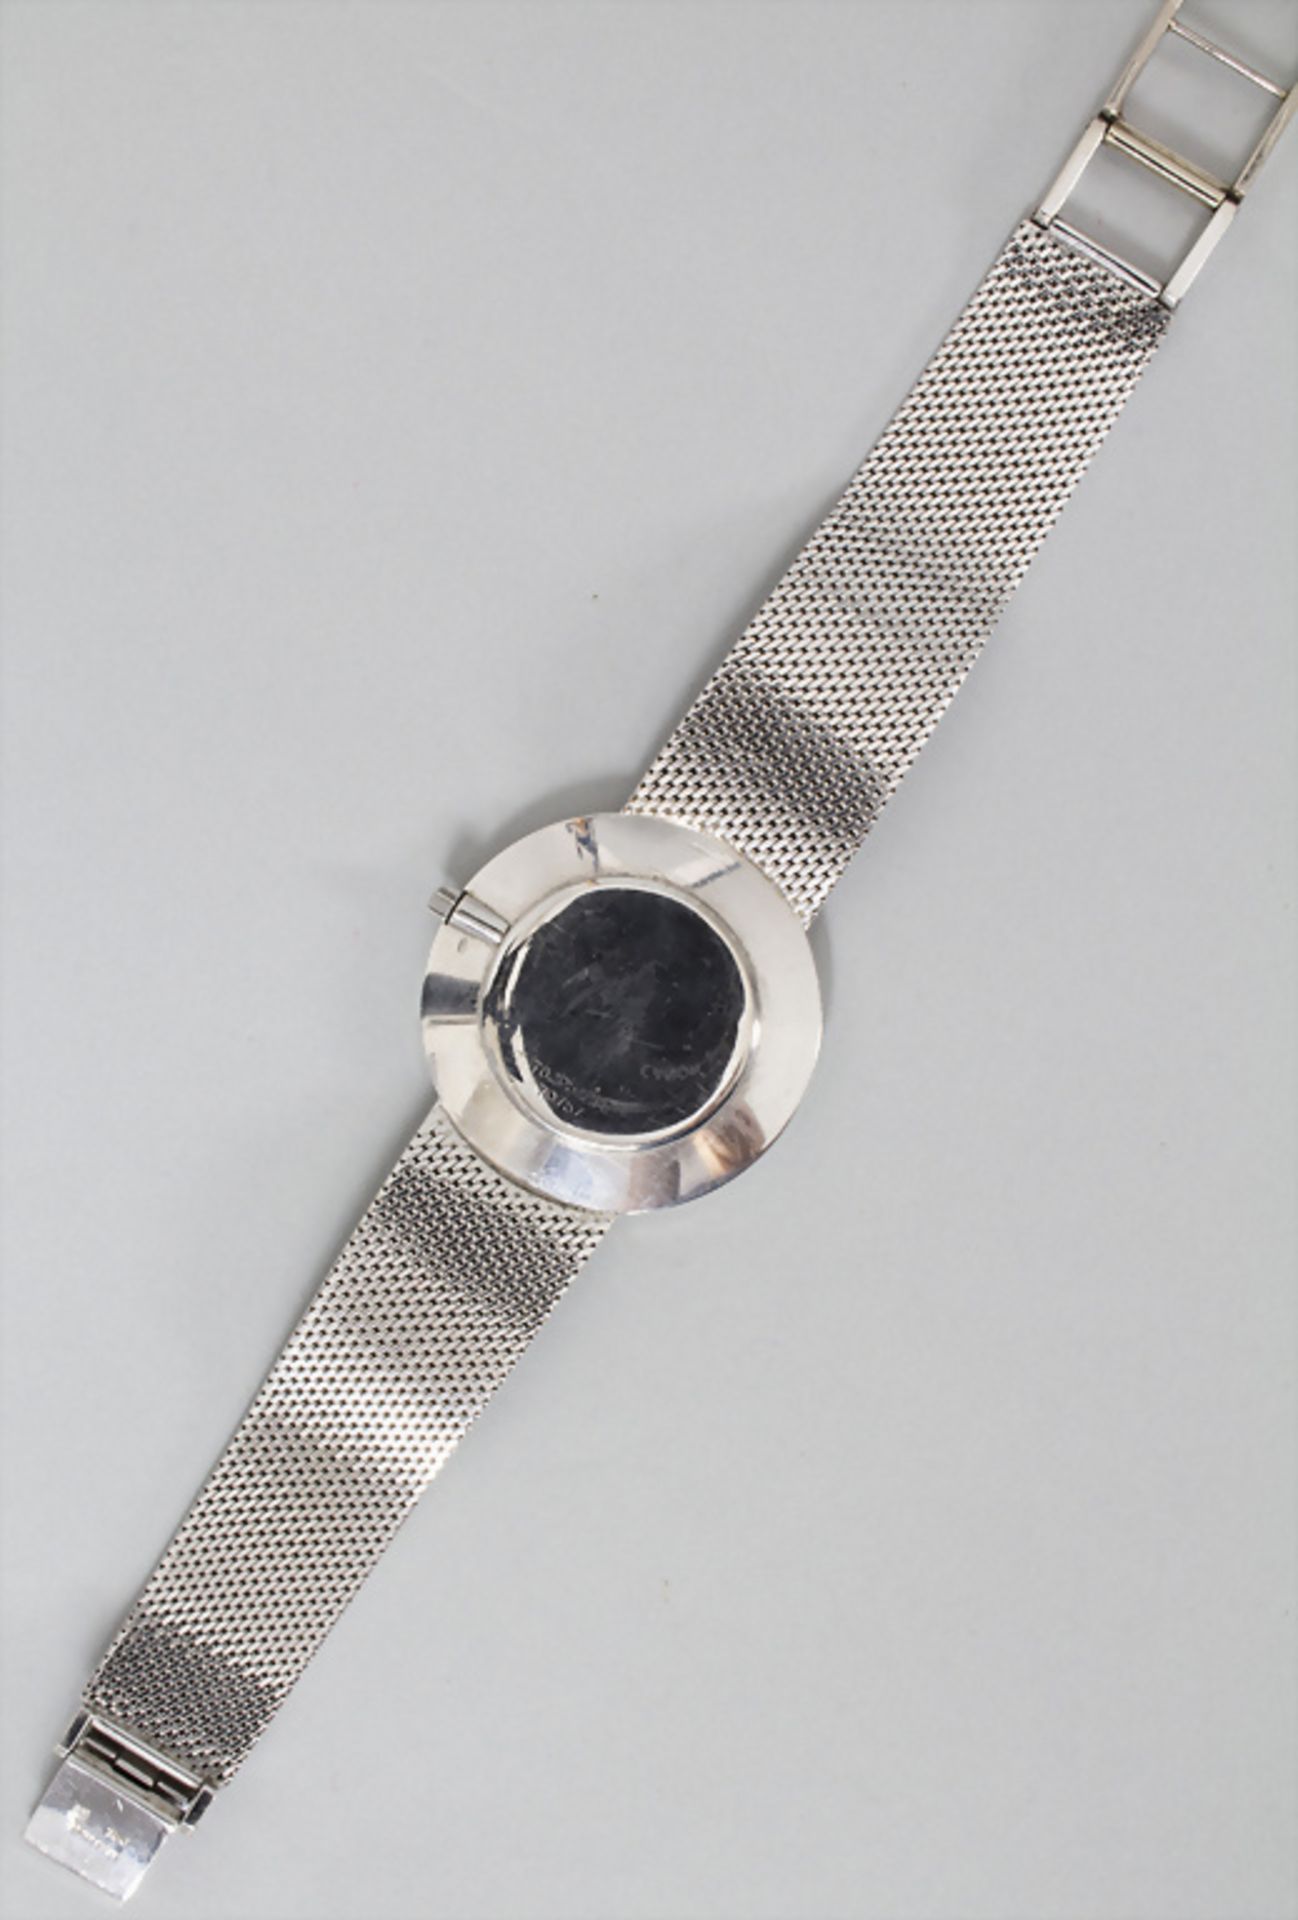 Herrenarmbanduhr / A men's wristwatch, Universal Géneve, Swiss, um 1970 - Bild 4 aus 4